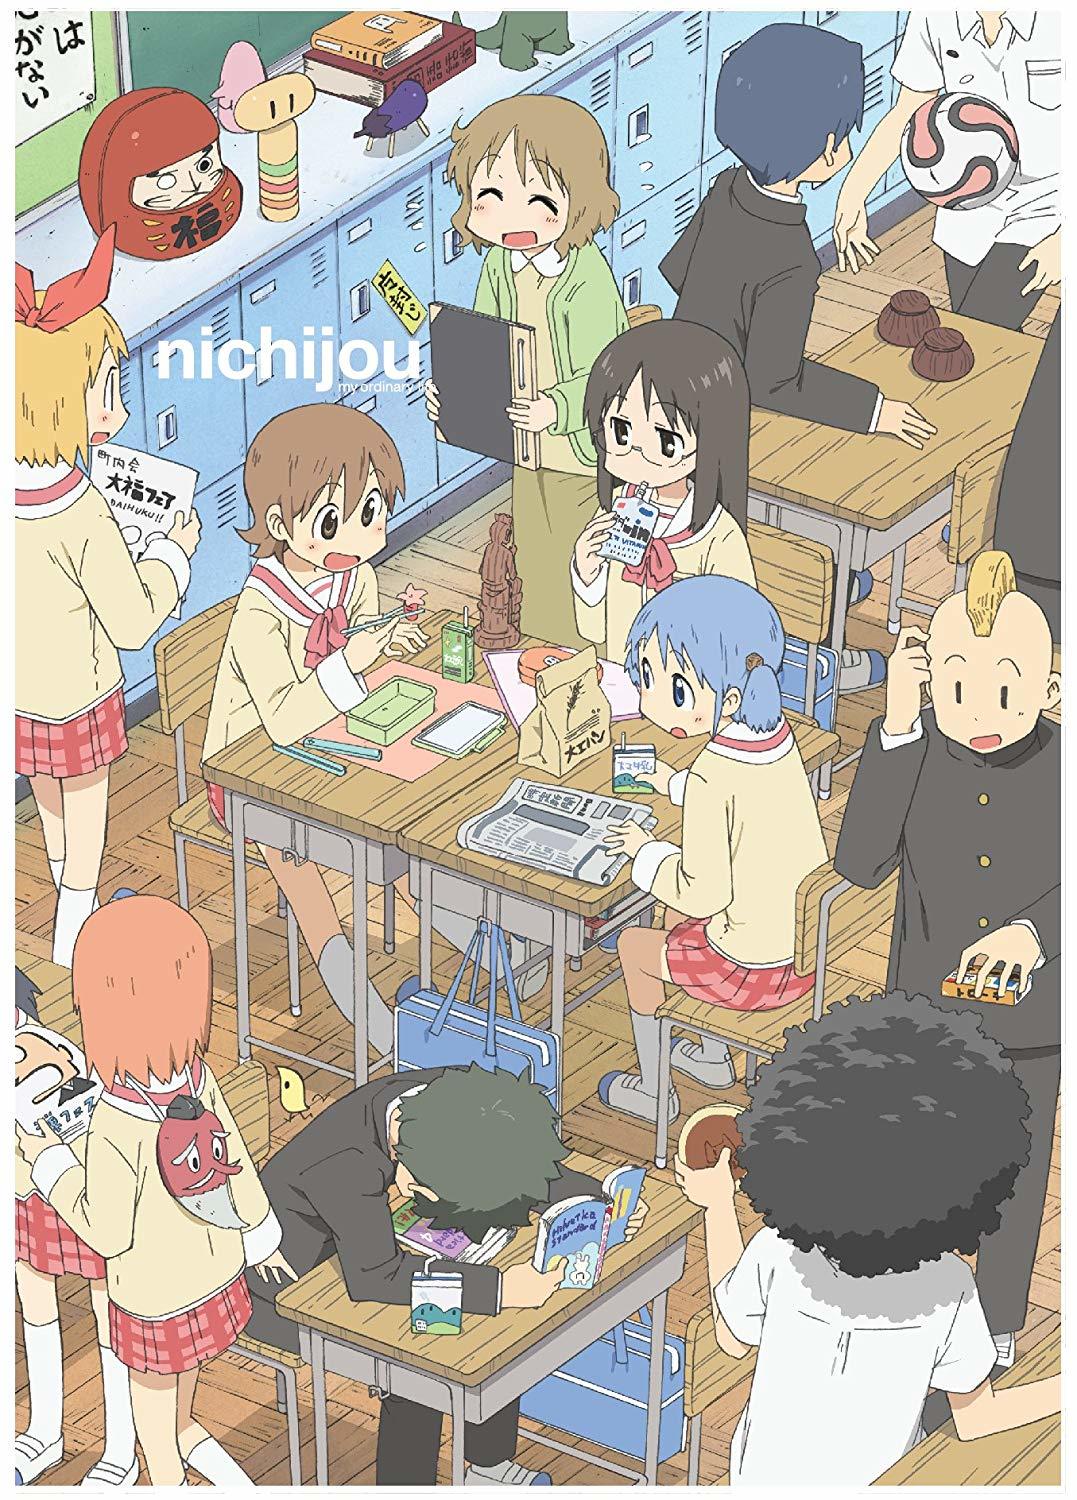 Aashi's Anime and Manga Club